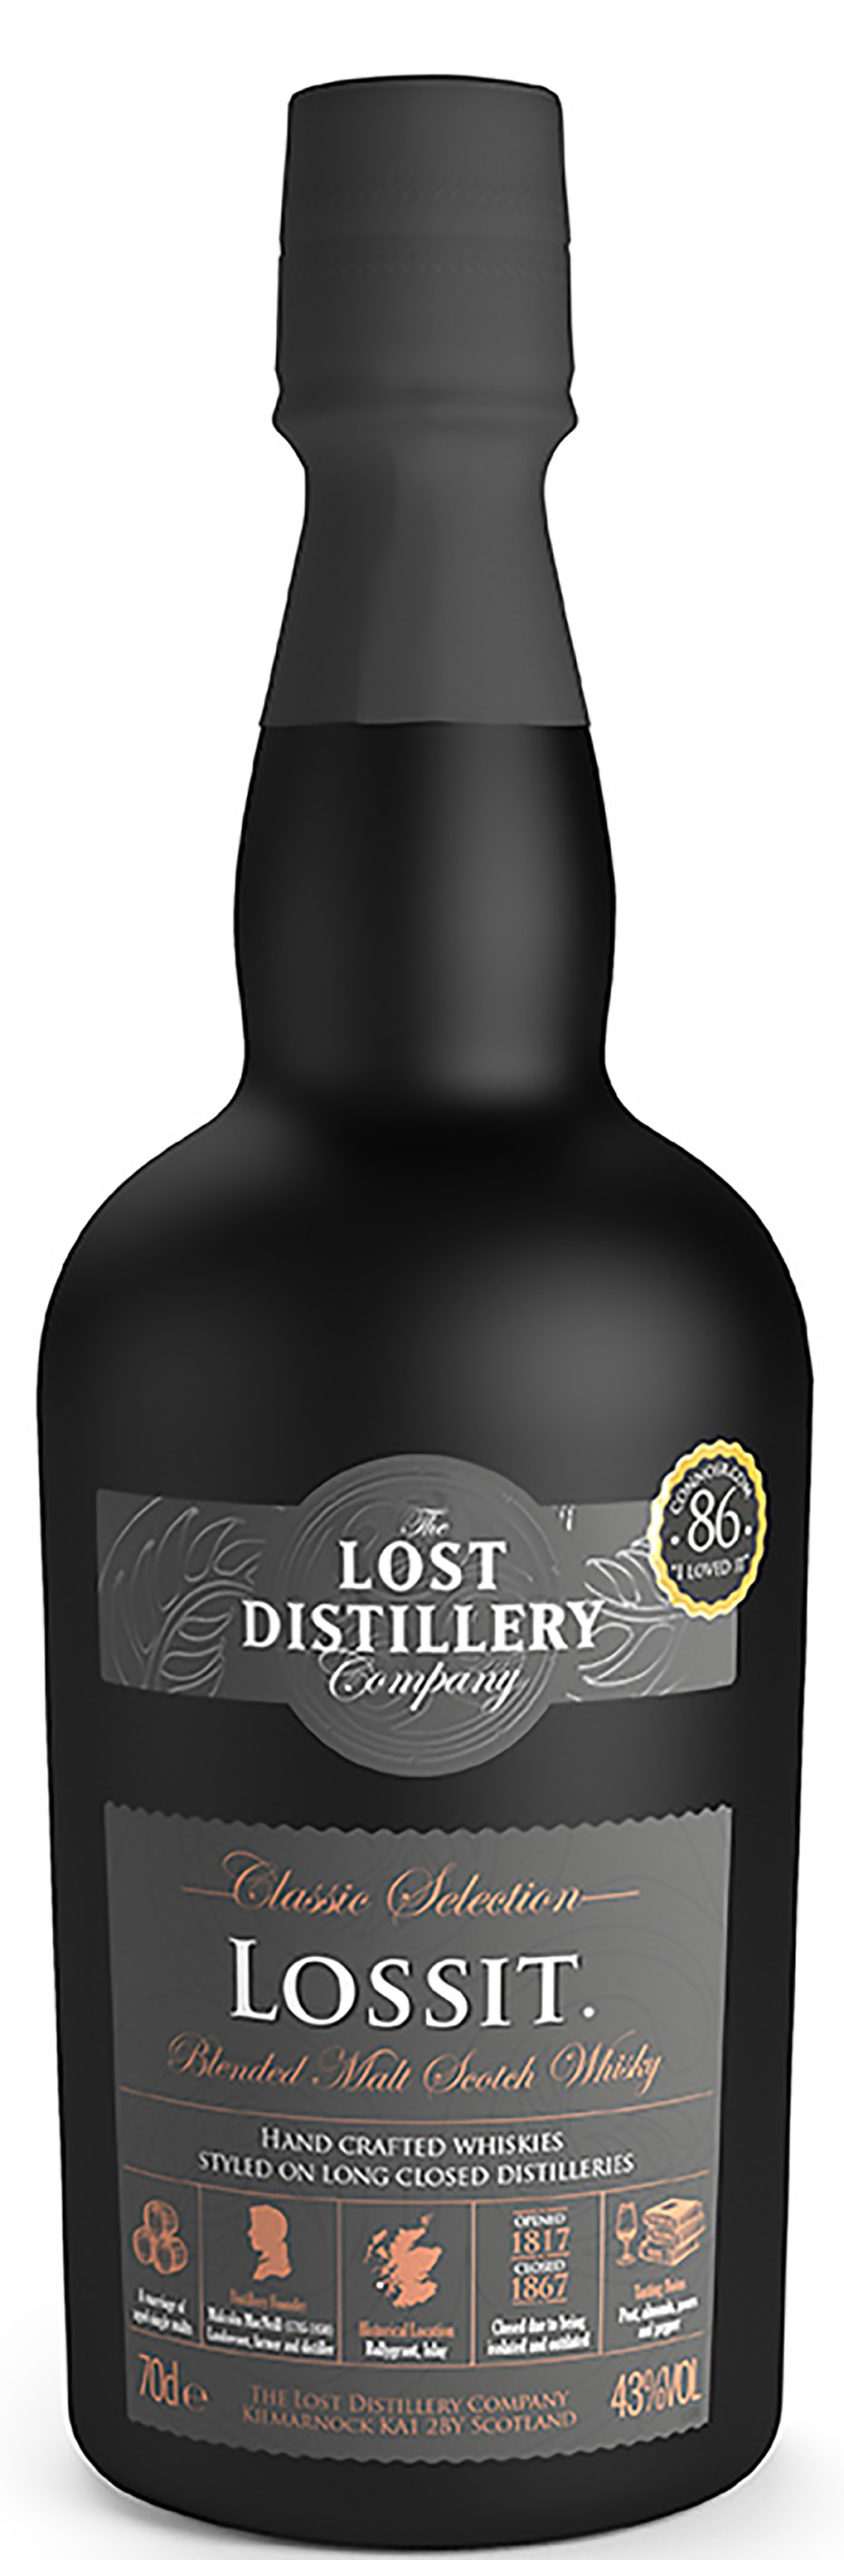 The Lost Distillery Lossit Blended Malt